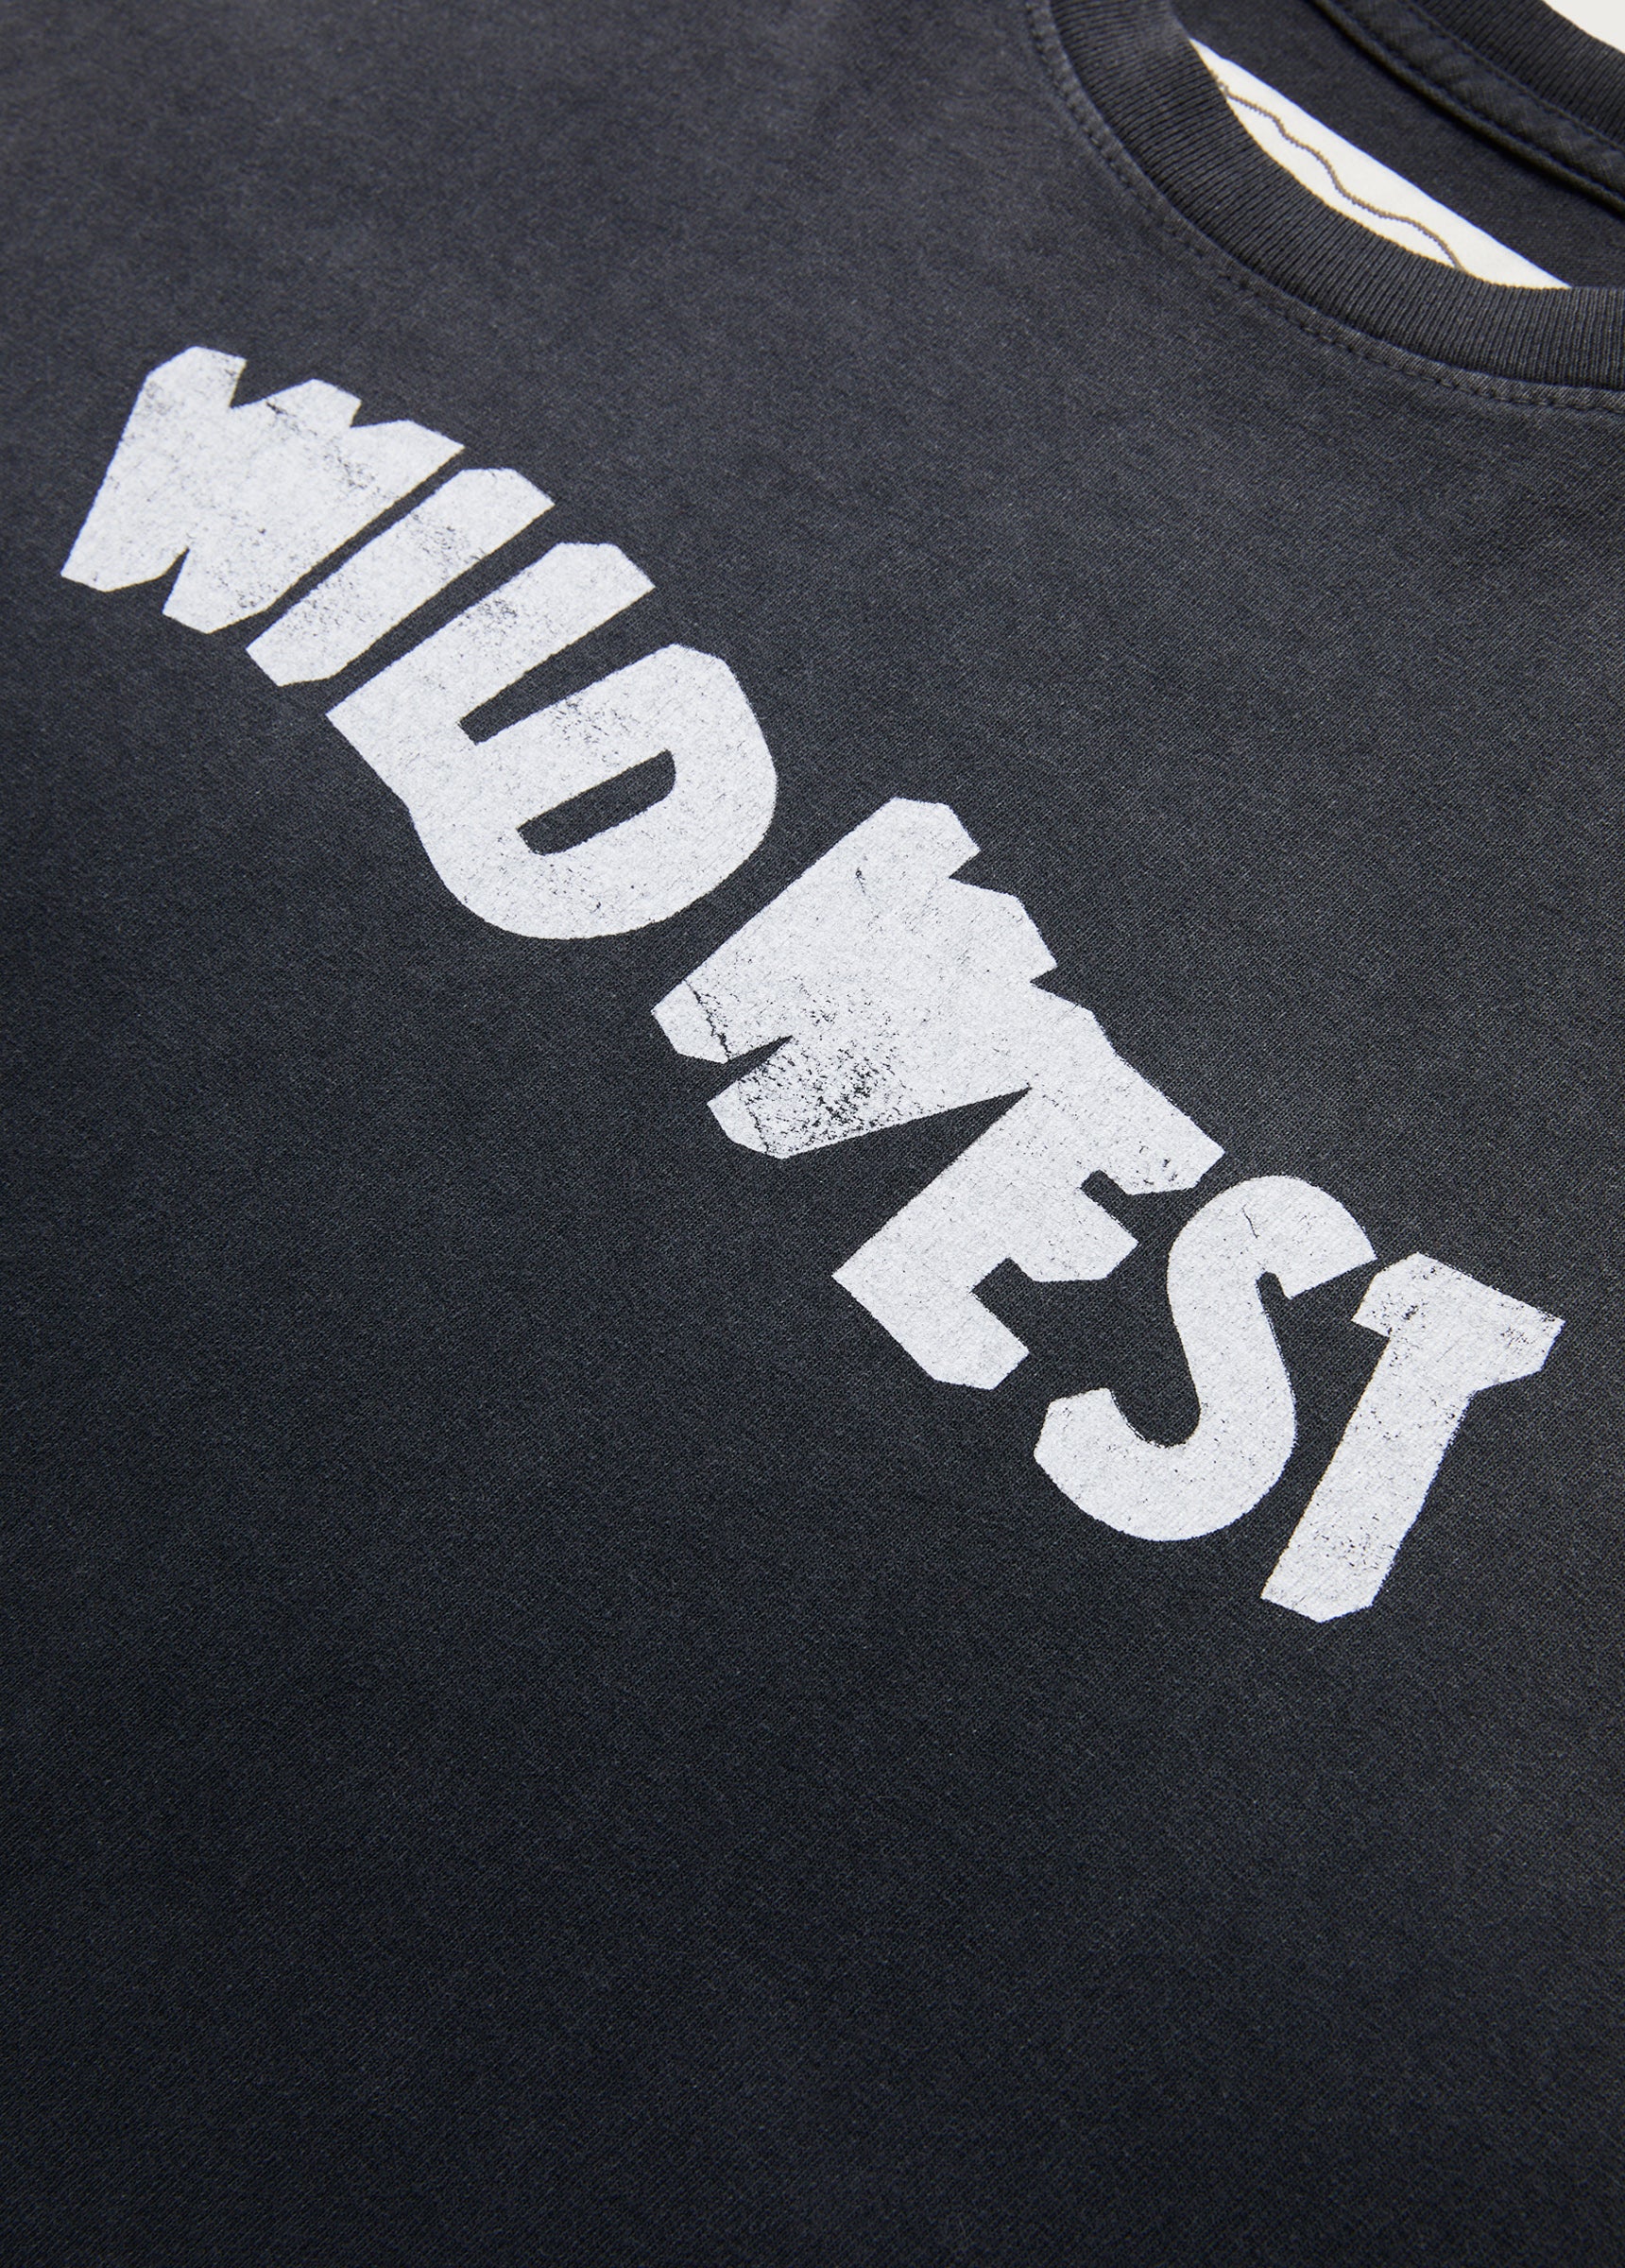 Wild West Tee | Washed Black